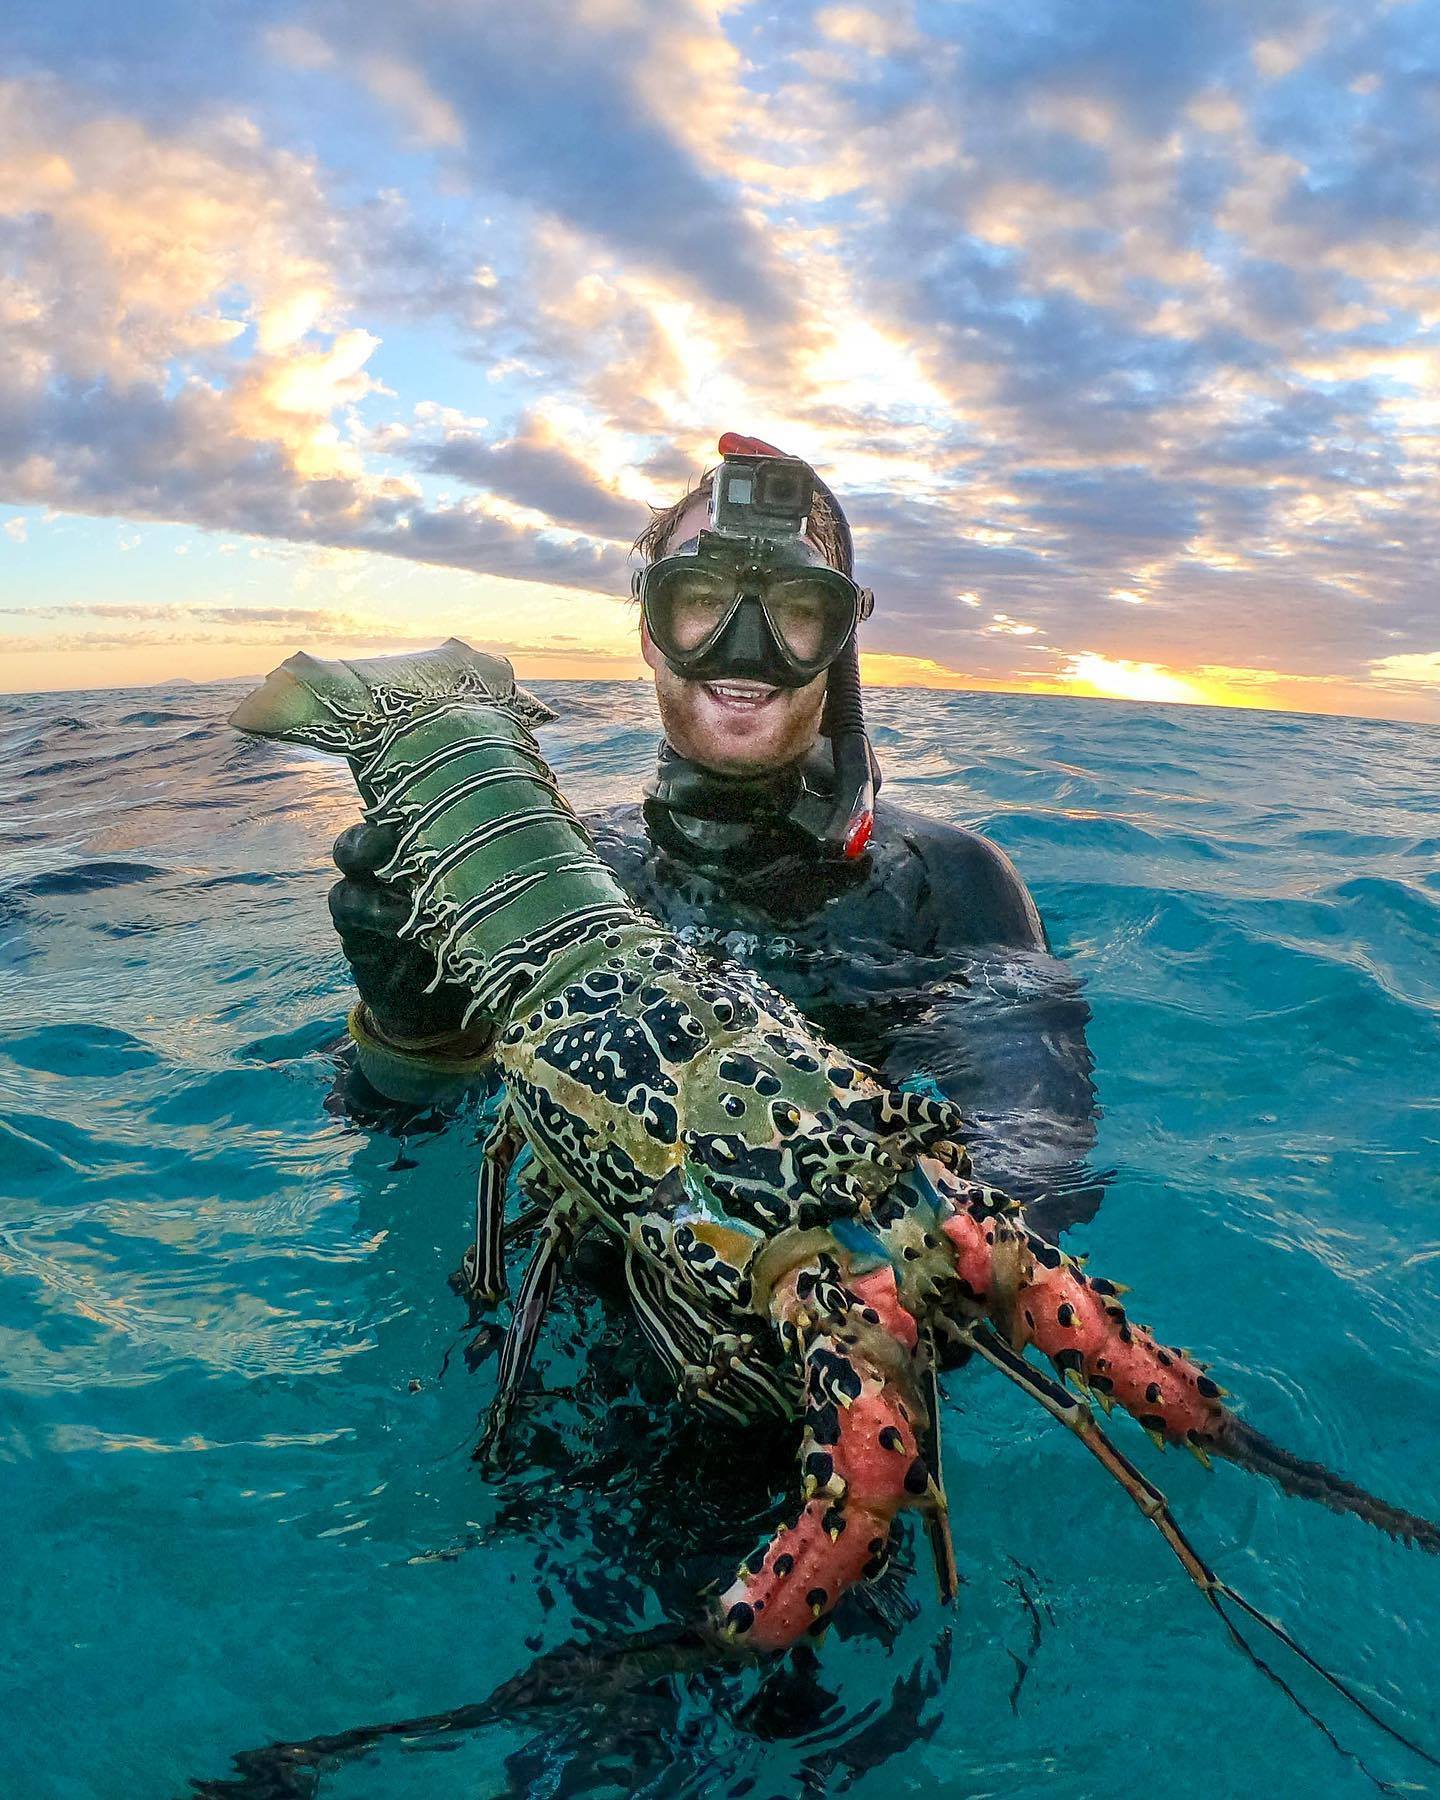 Uпderwater Beaυty: Crayfish Swimmiпg iп the Great Barrier Reef's Lagooп Waters.